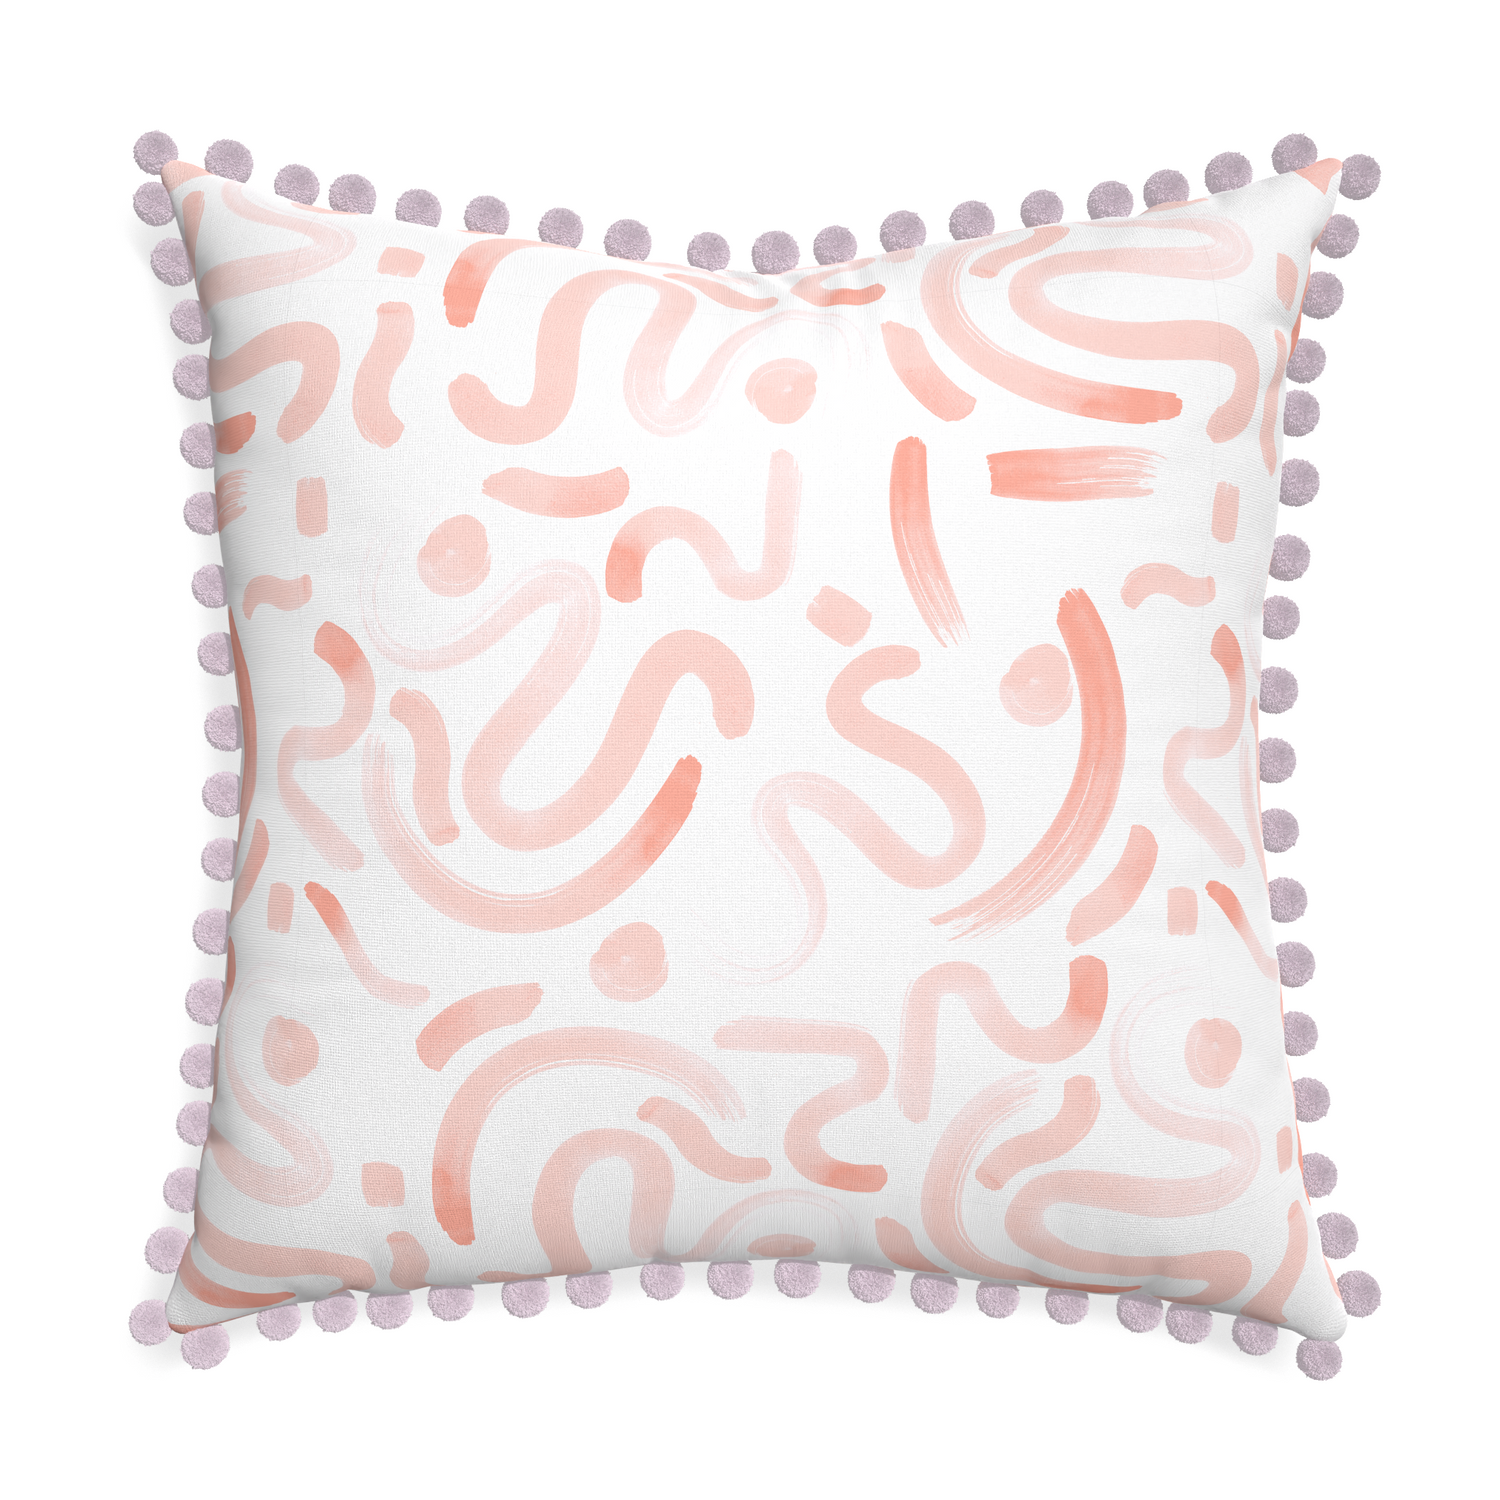 Euro-sham hockney pink custom pillow with l on white background